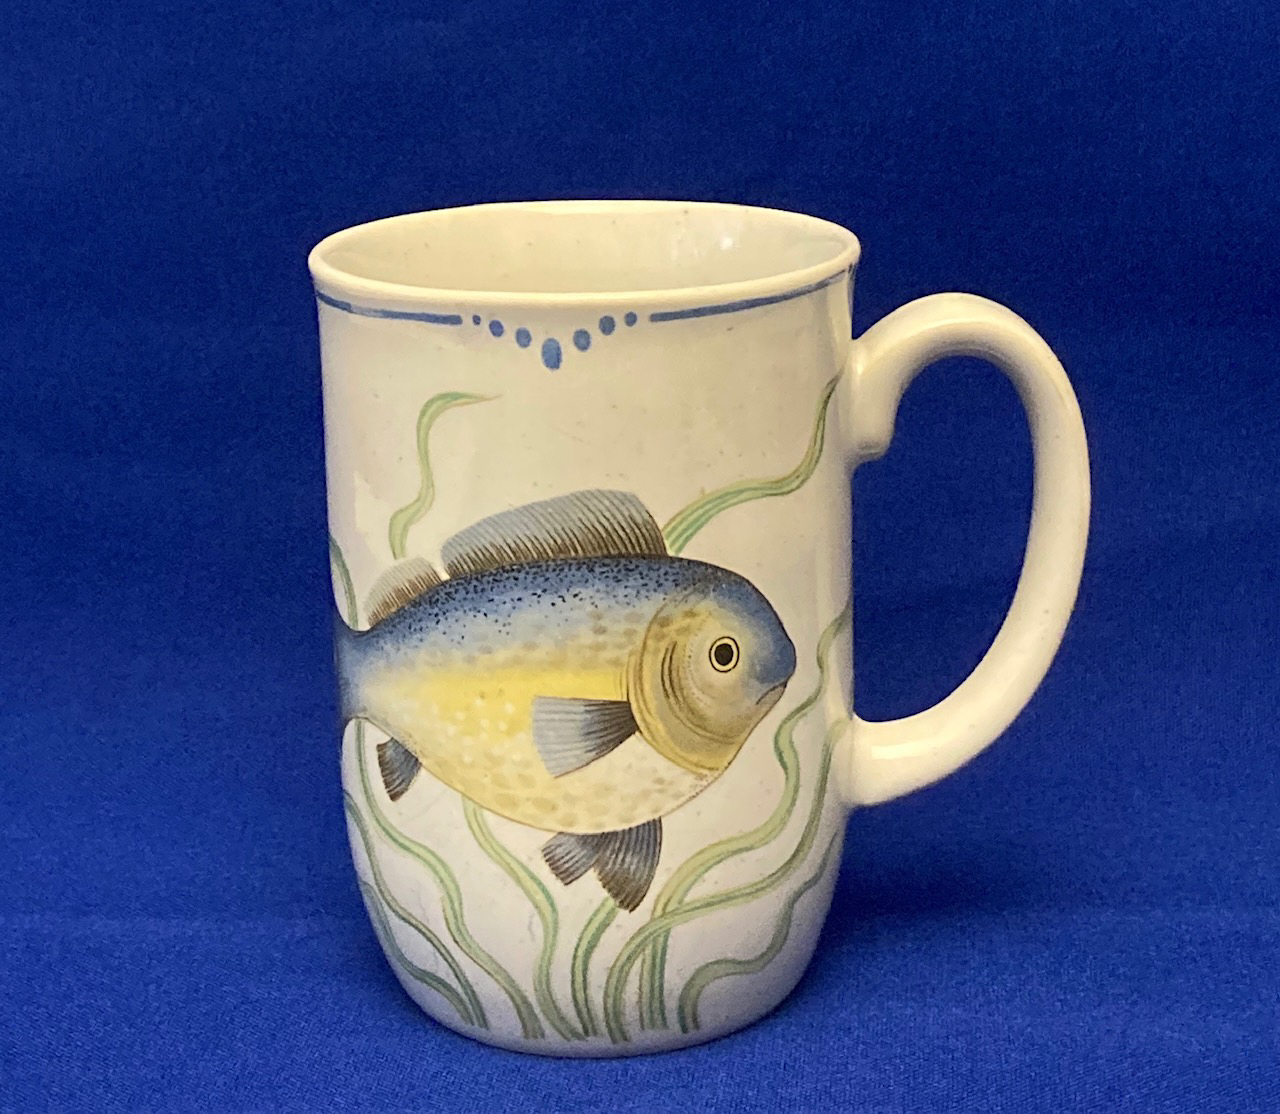 Fitz and Floyd La Mer coffee mug vintage 1979 cup The Sea fish nautical theme - $10.00